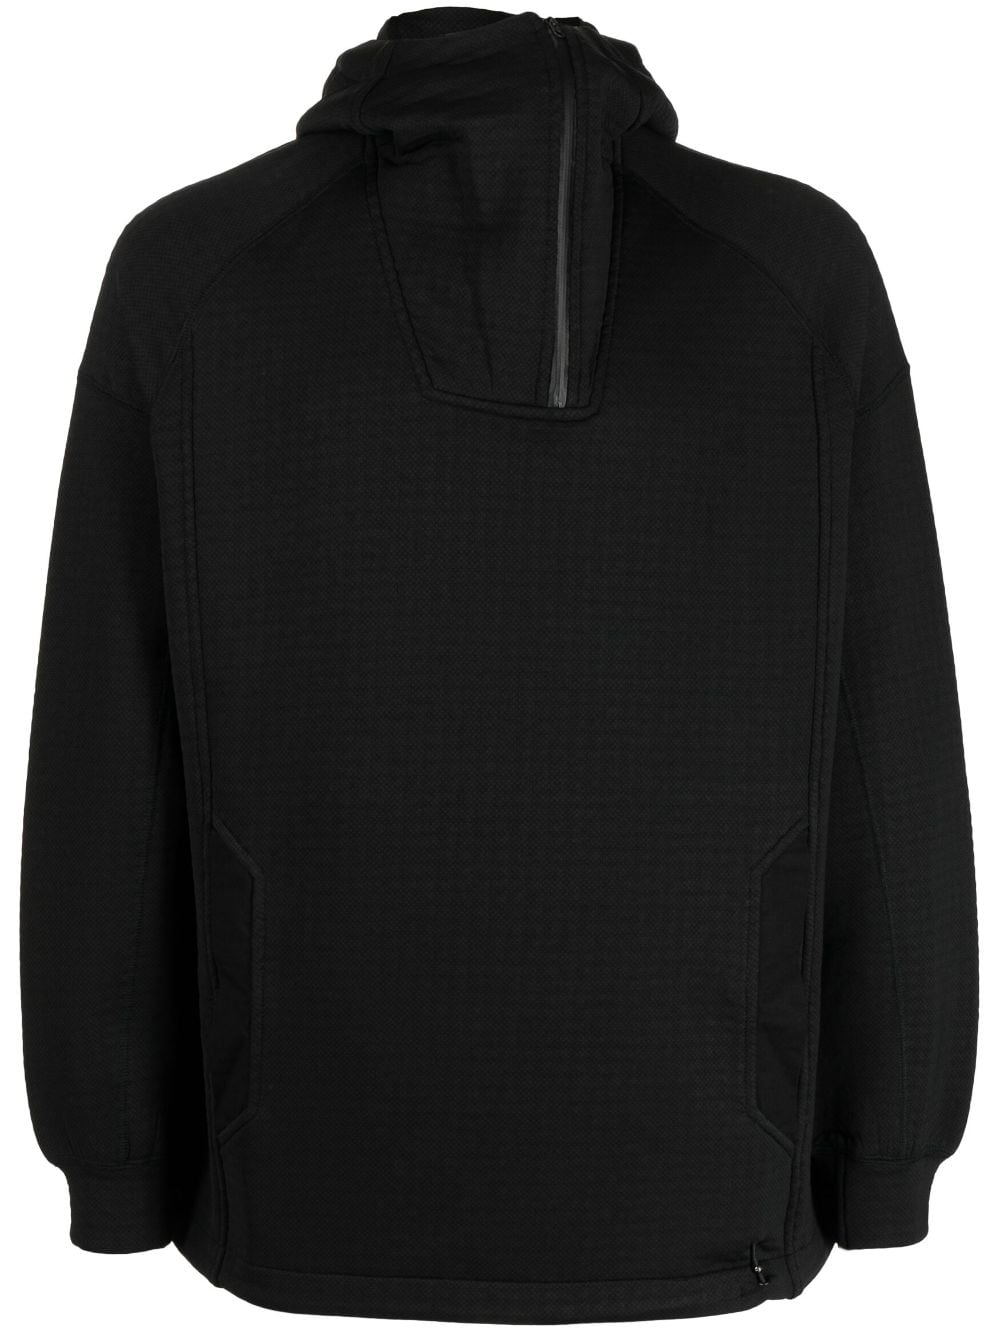 Maharishi Polartec Power Air hoodie - Black von Maharishi